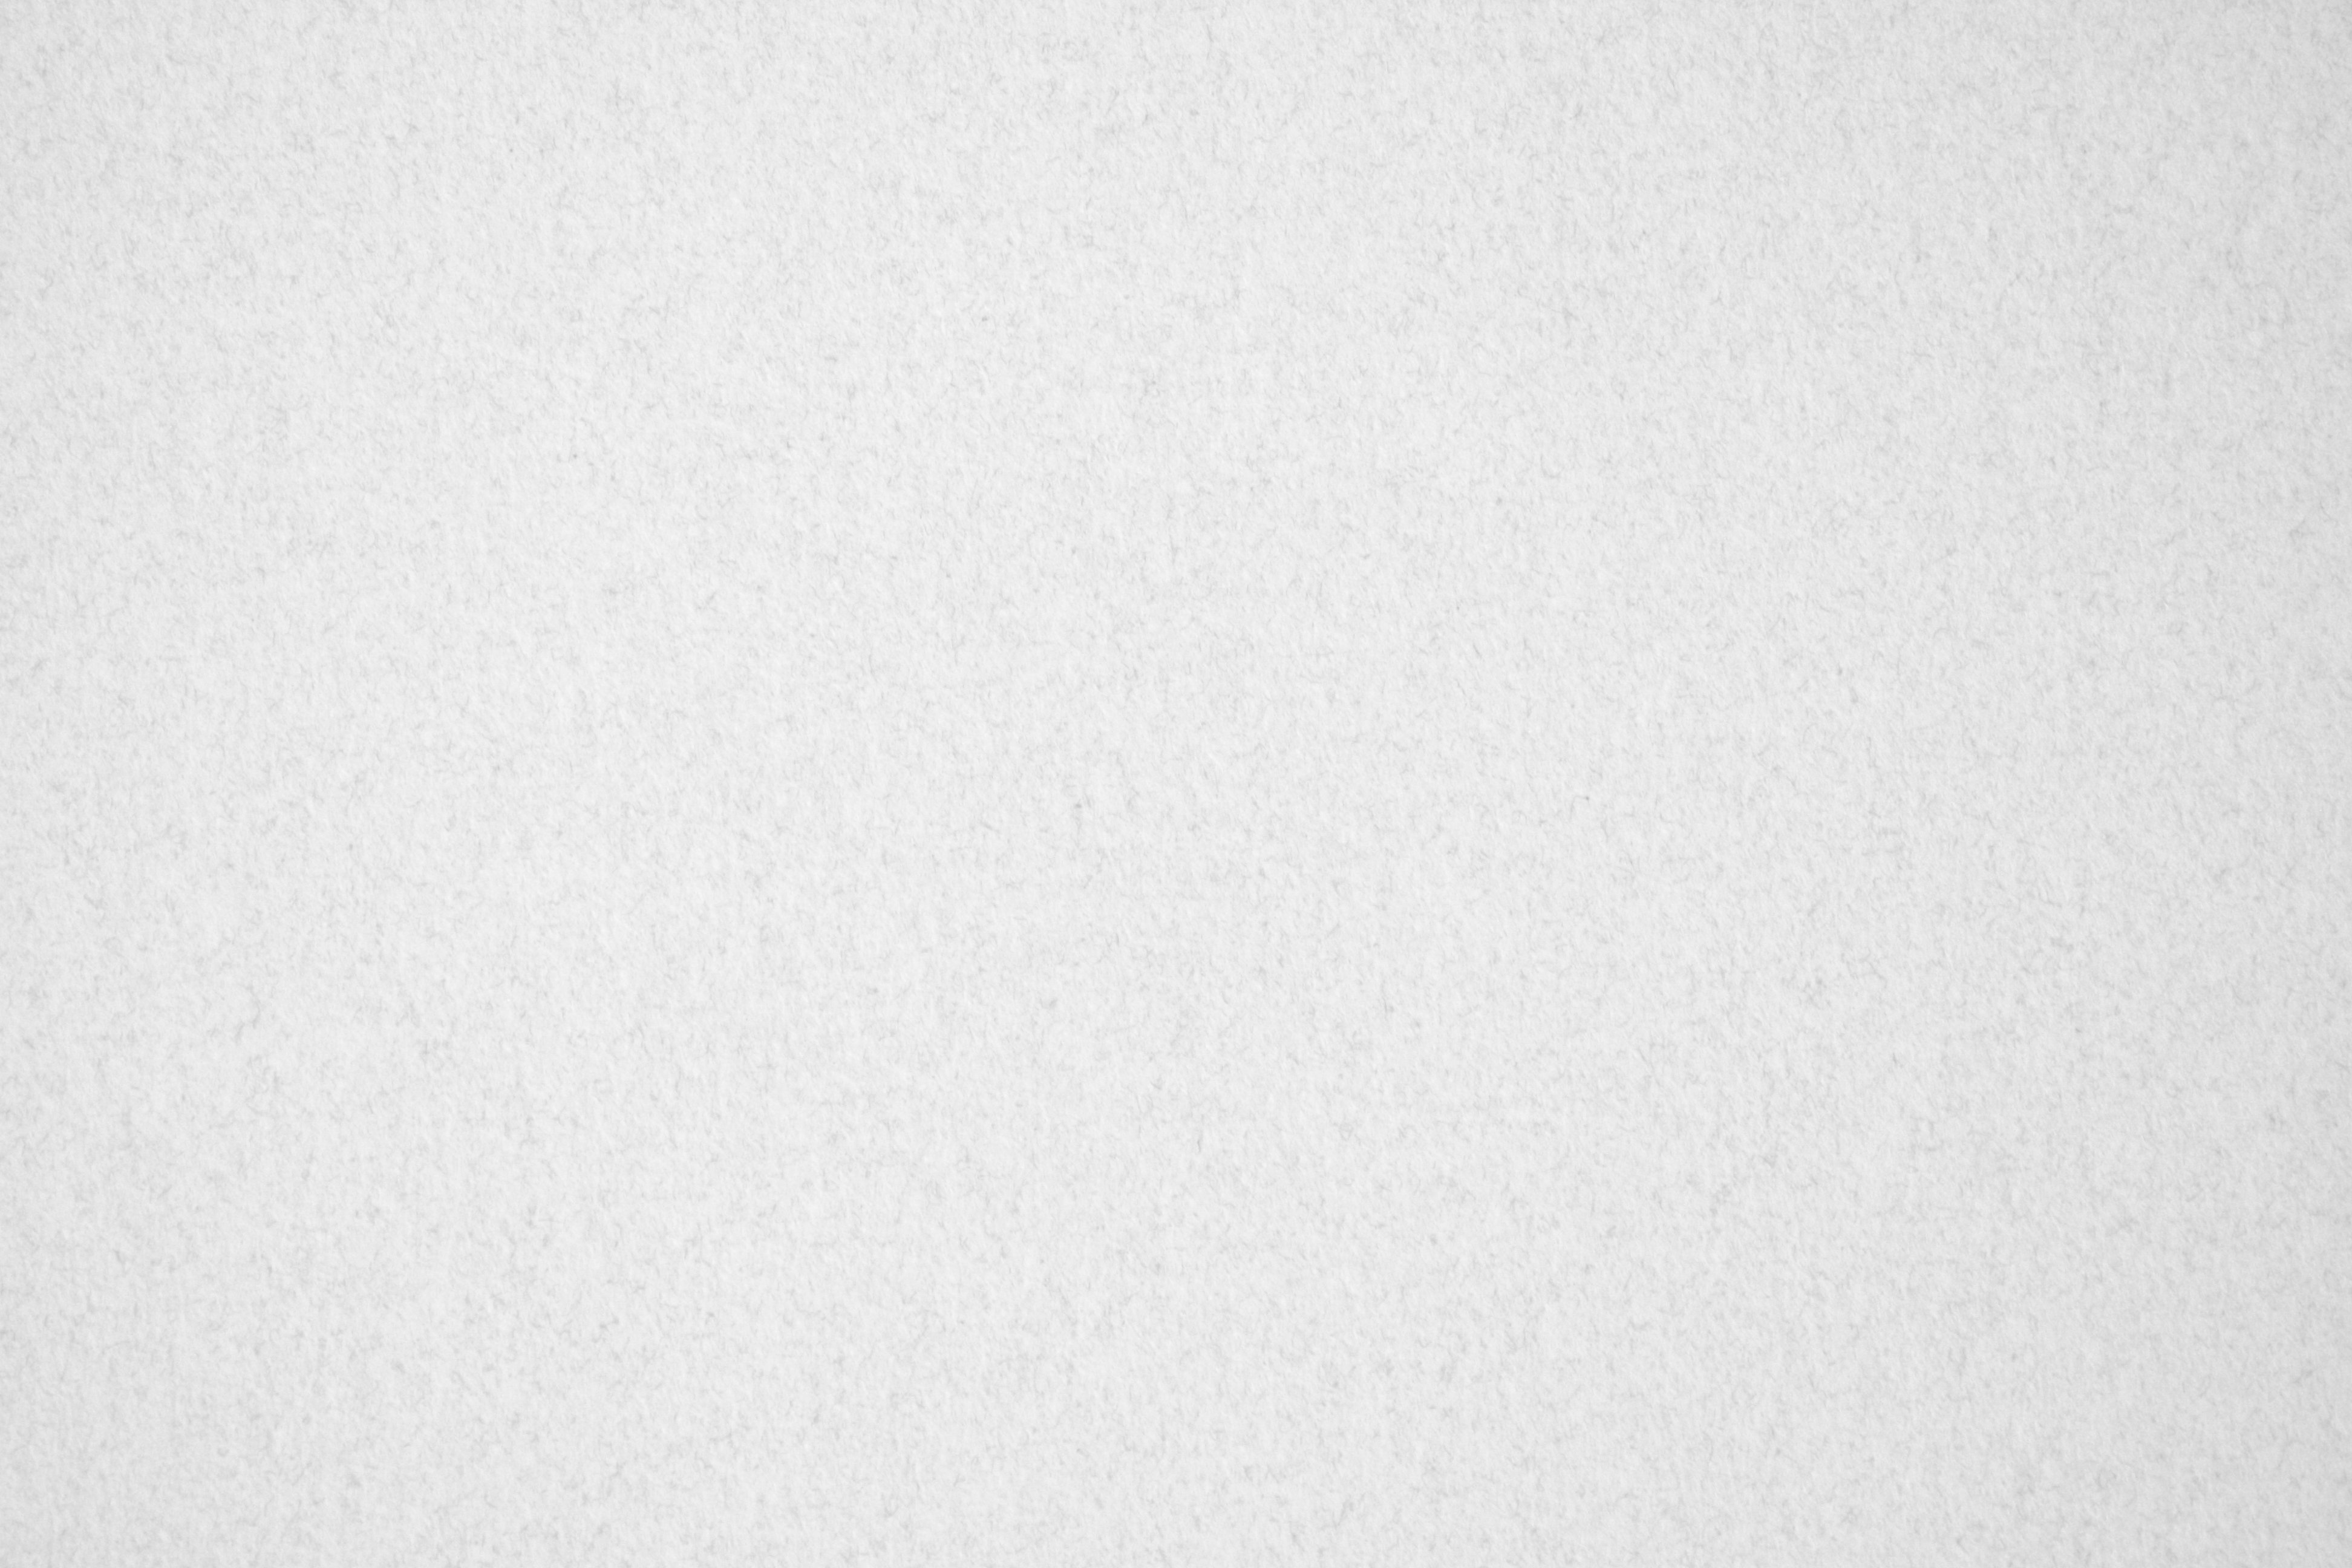 White Speckled Paper Texture Picture Free Photograph Photos Public